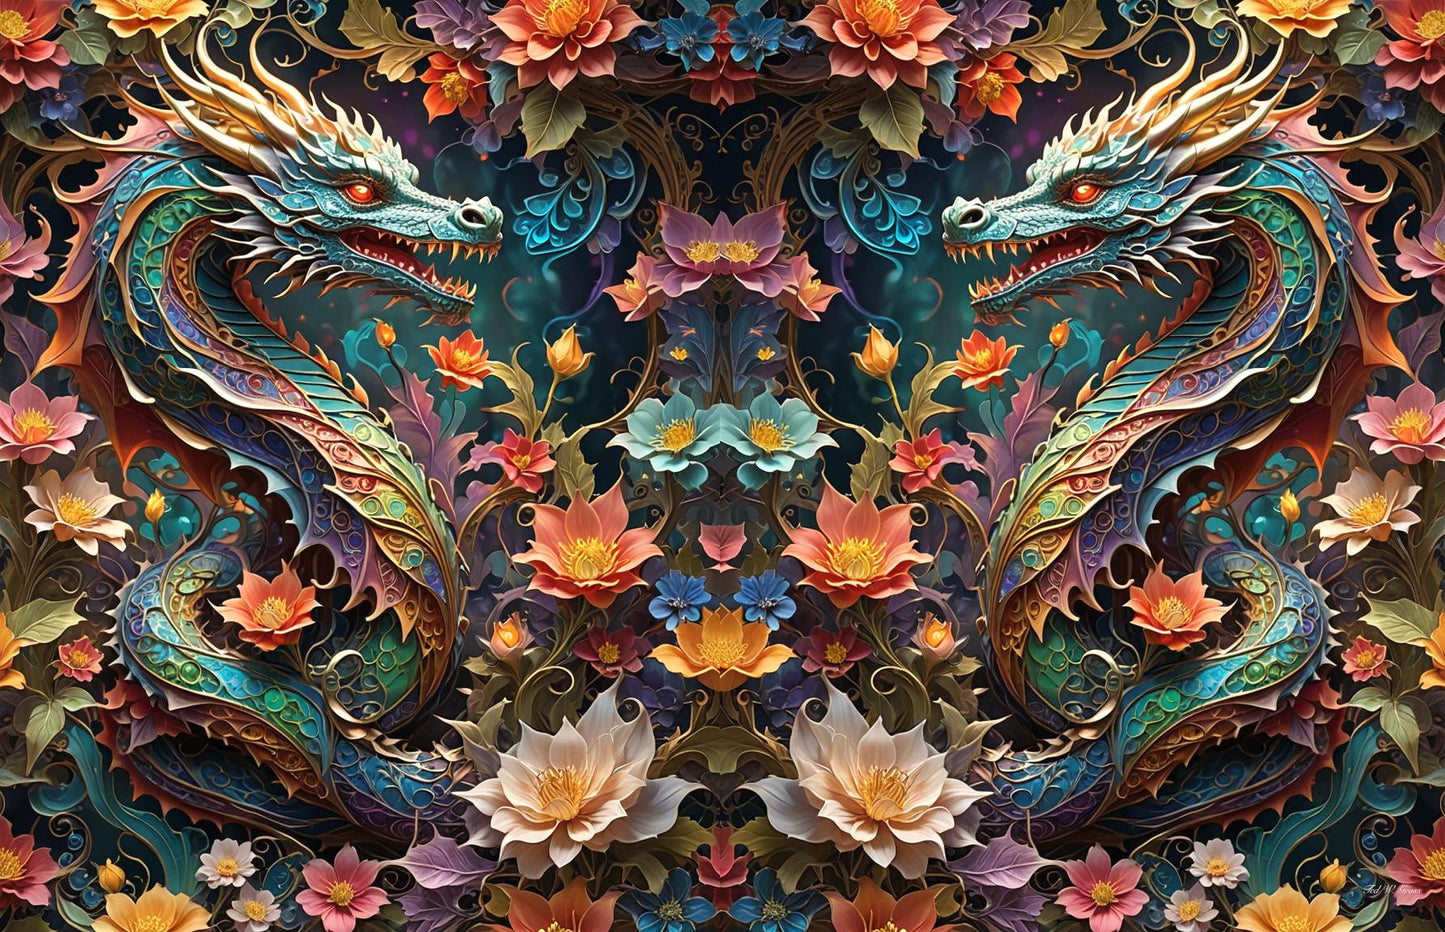 Sea Dragon - Floral & Filigree Digital Art Art > Digital Art > Cobwebs Of The Mind > Abstract > Digital Compositions